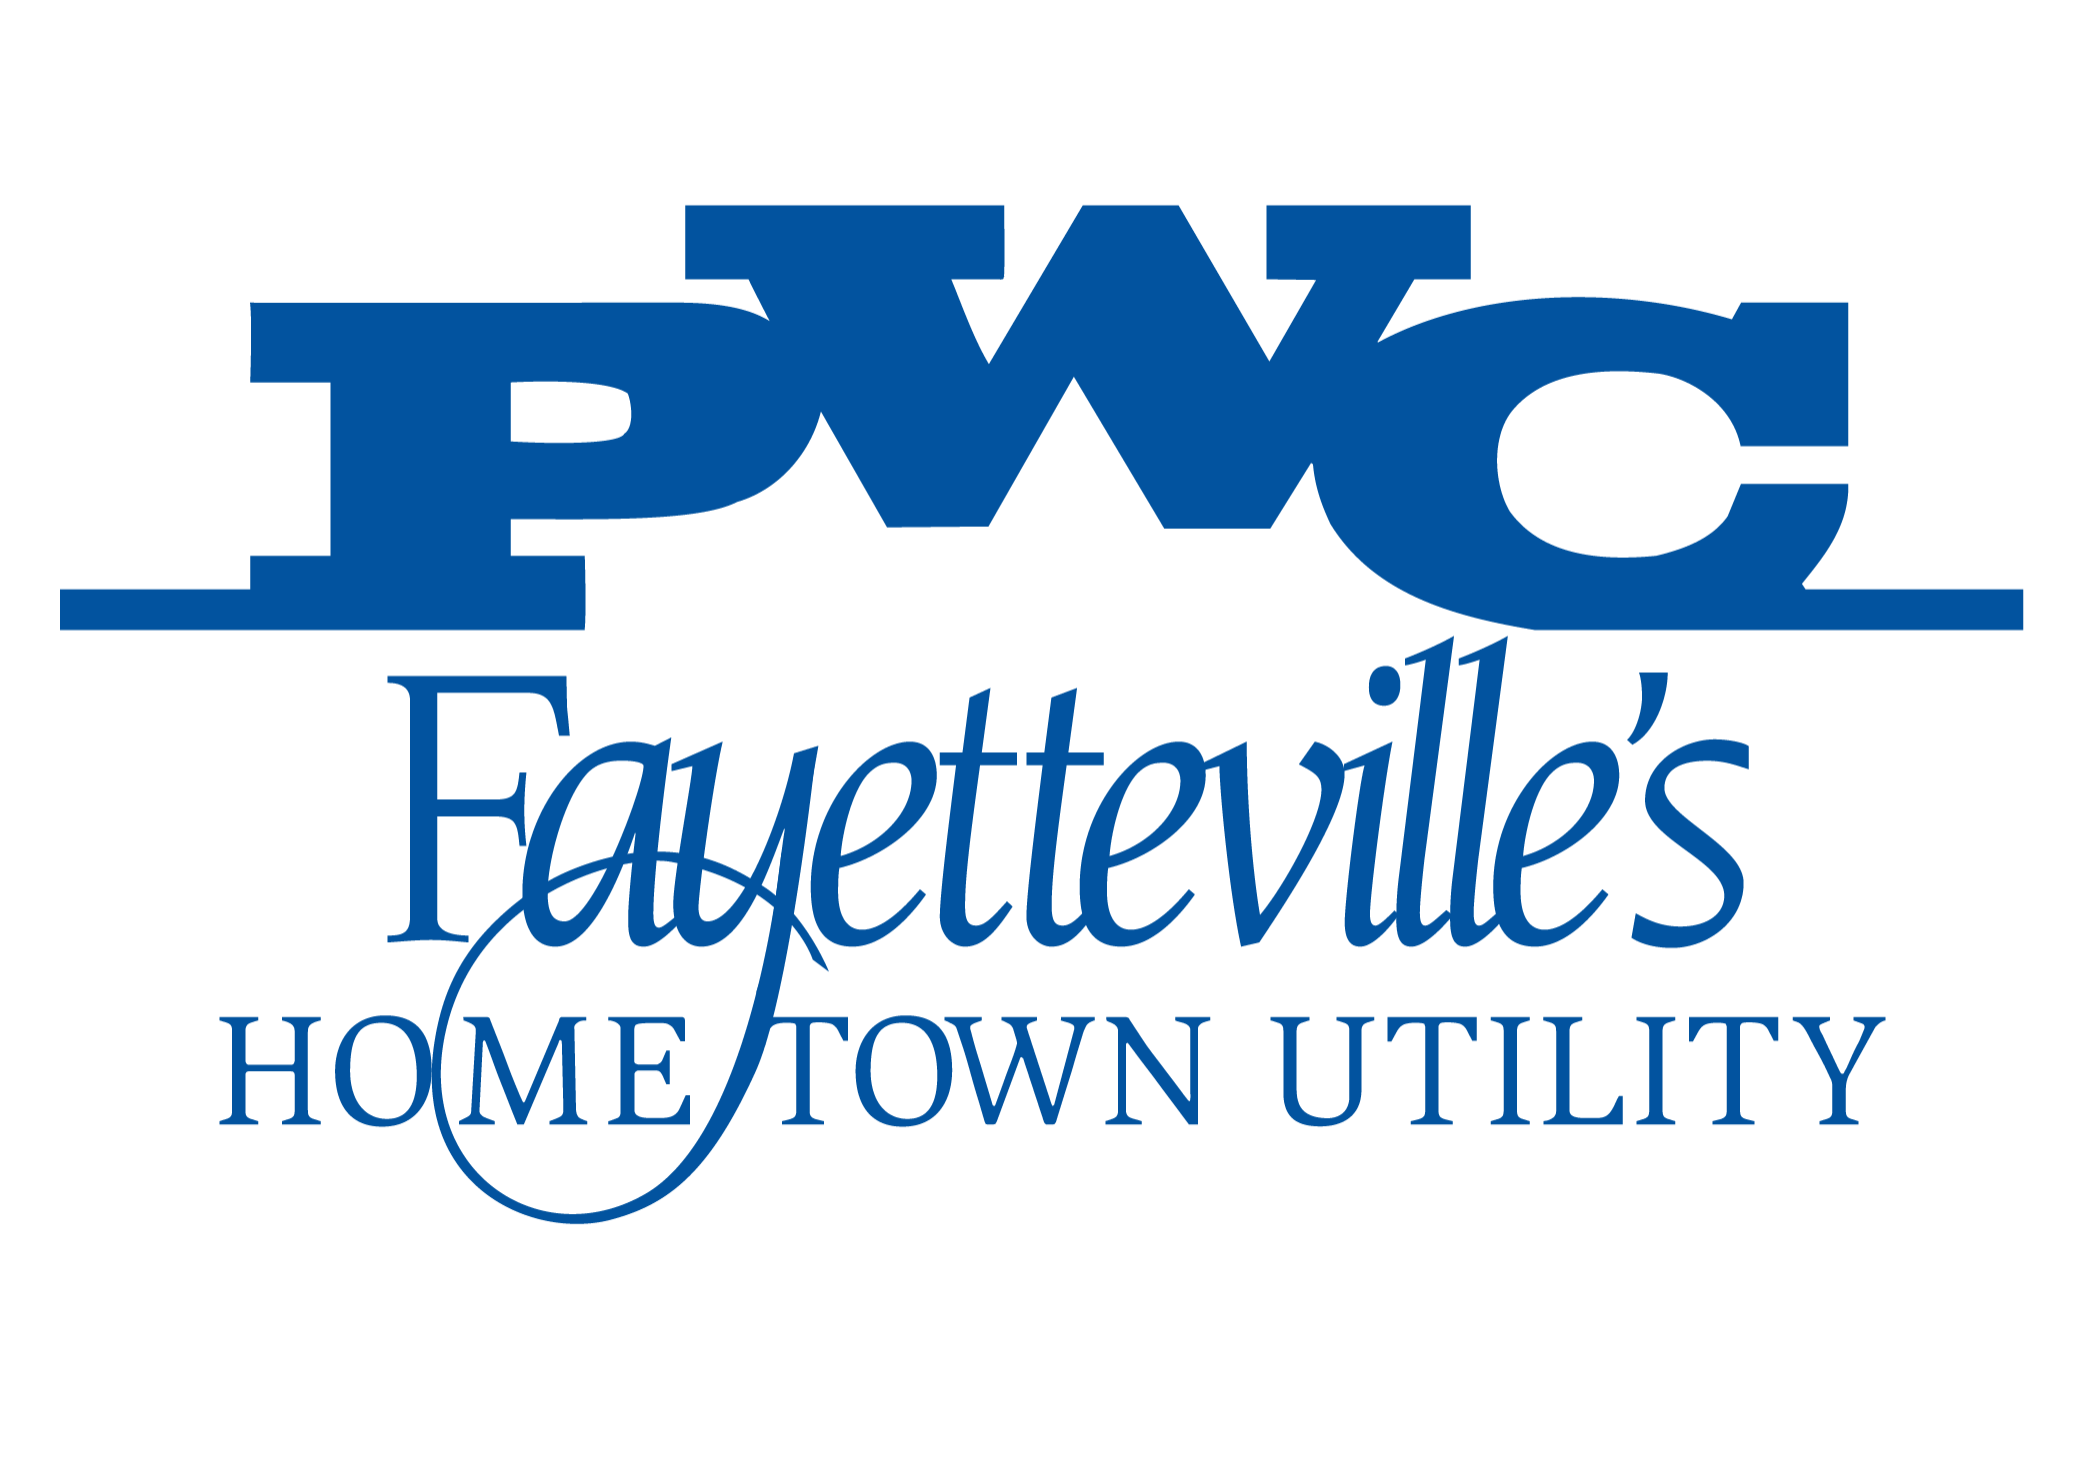 PWC Fayetteville's Home Town Utility logo